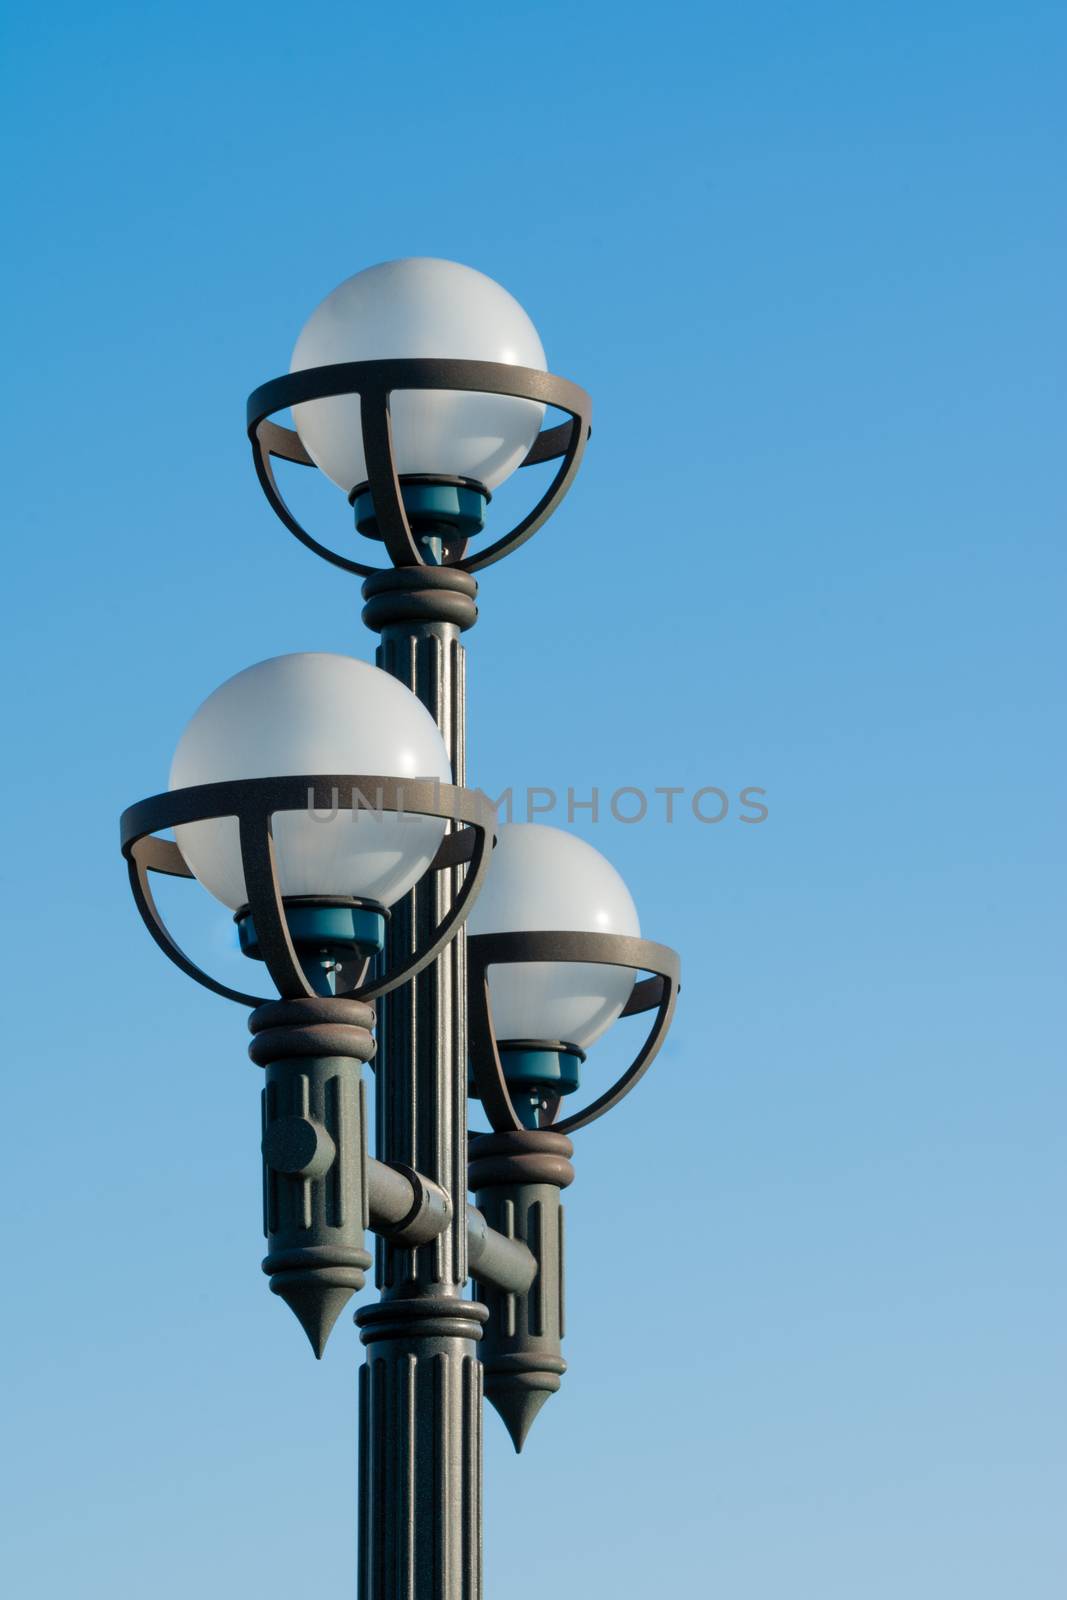 Light Post on Blue Sky by justtscott